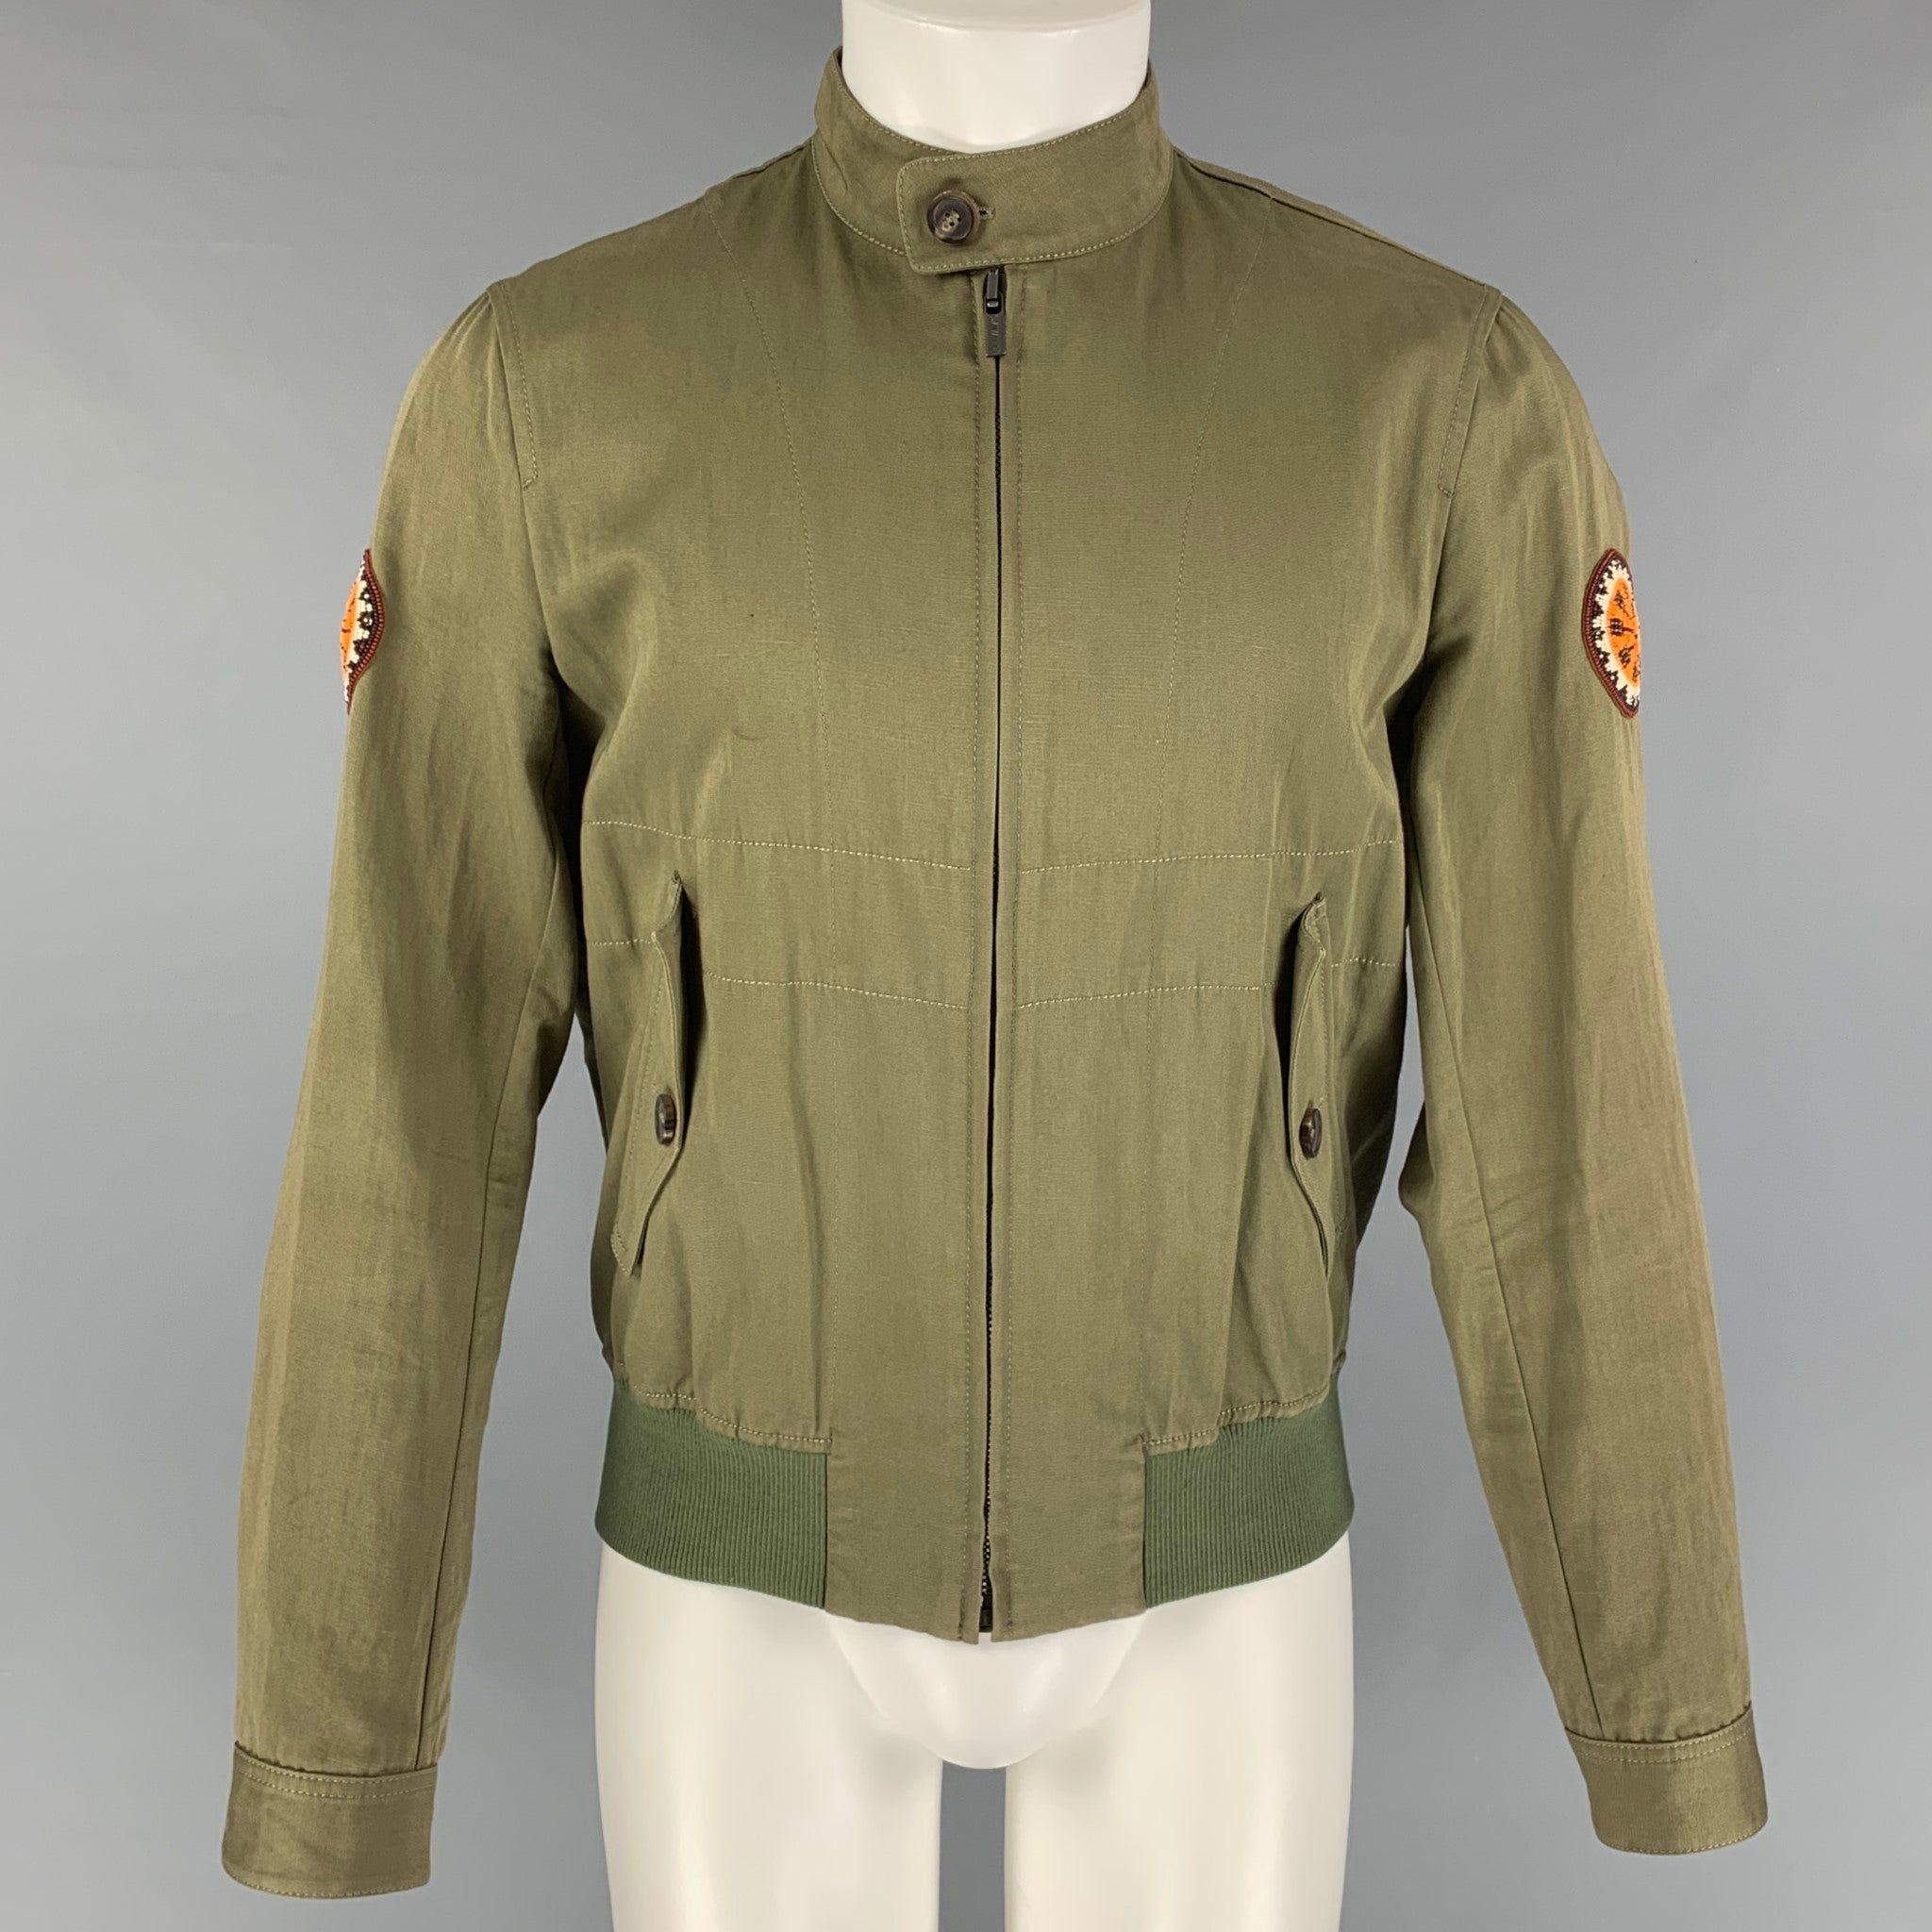 Roberto Cavalli 2016 Green Beaded Cotton Linen Zip Up Jacket Size US S / EU 44-46 / 1 - 1 Preview